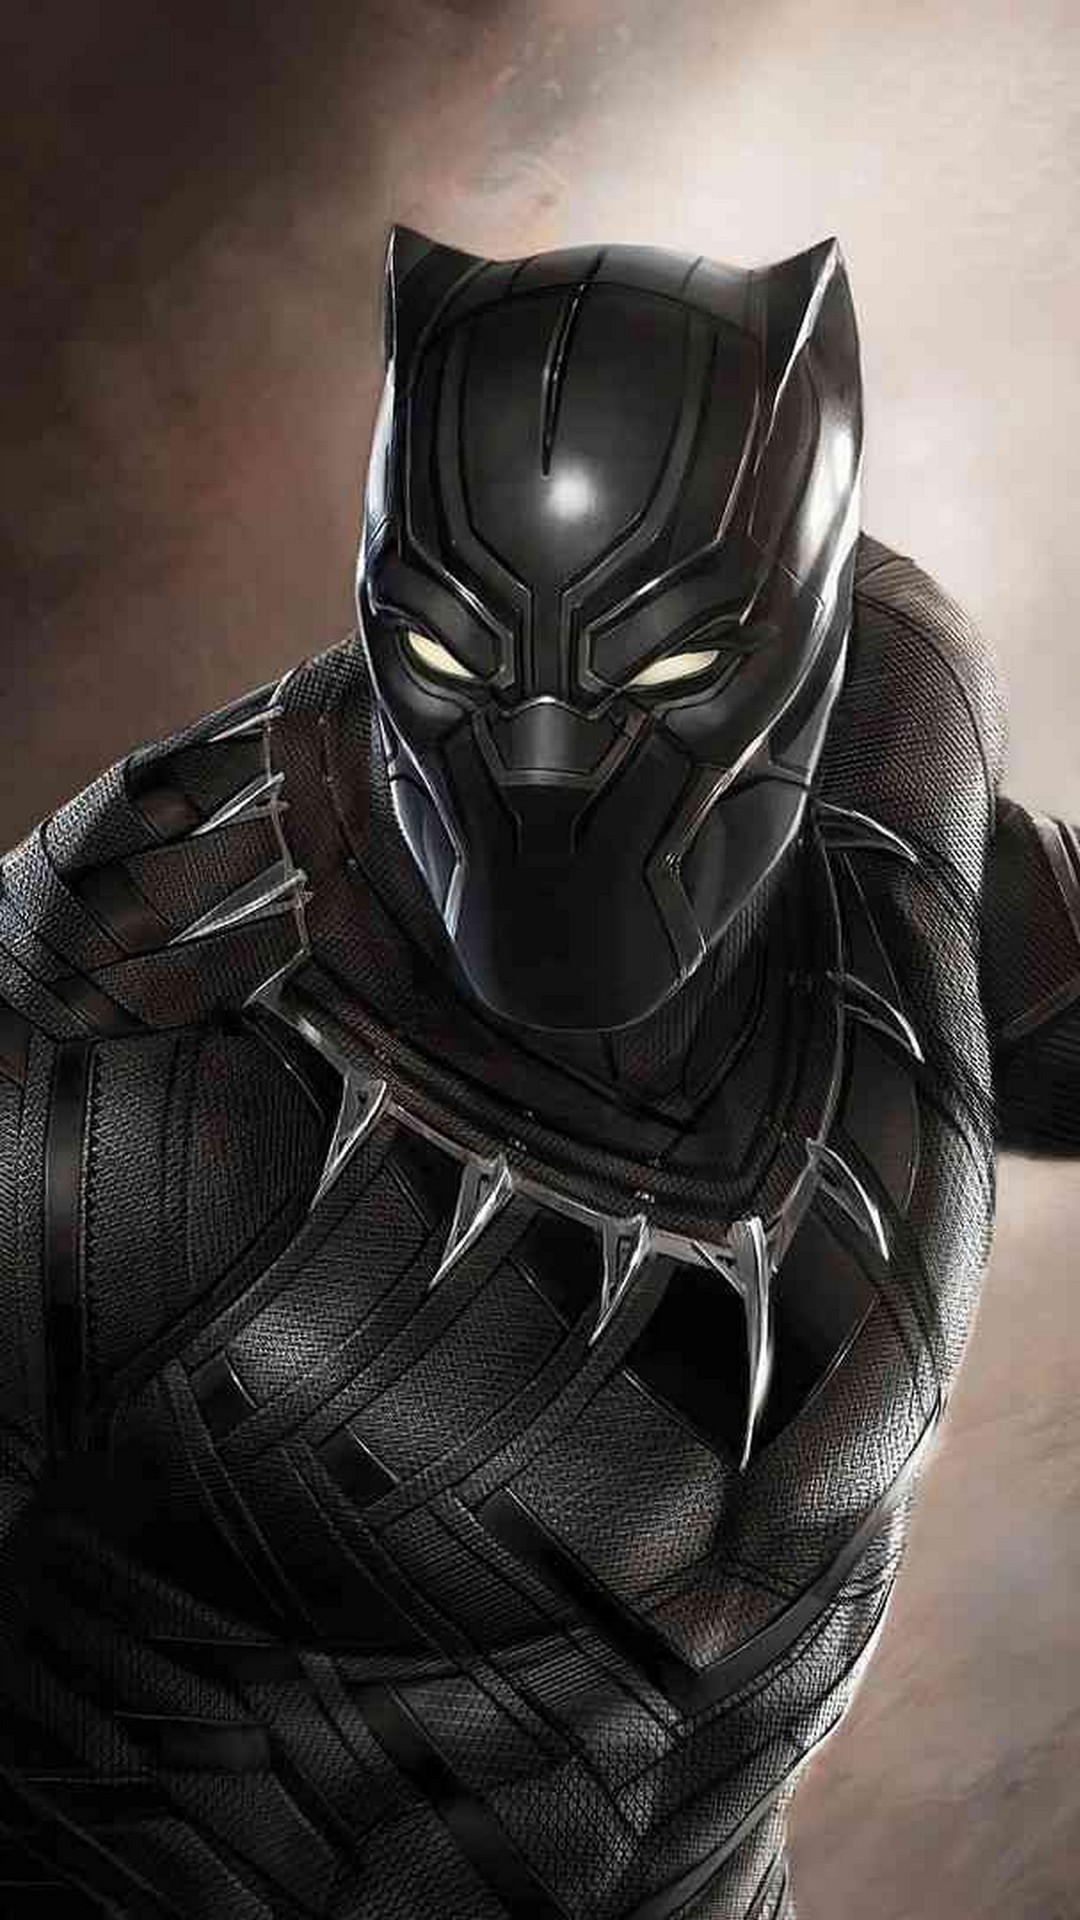 Black Panther Avengers Infinity War iPhone Wallpaper resolution 1080x1920